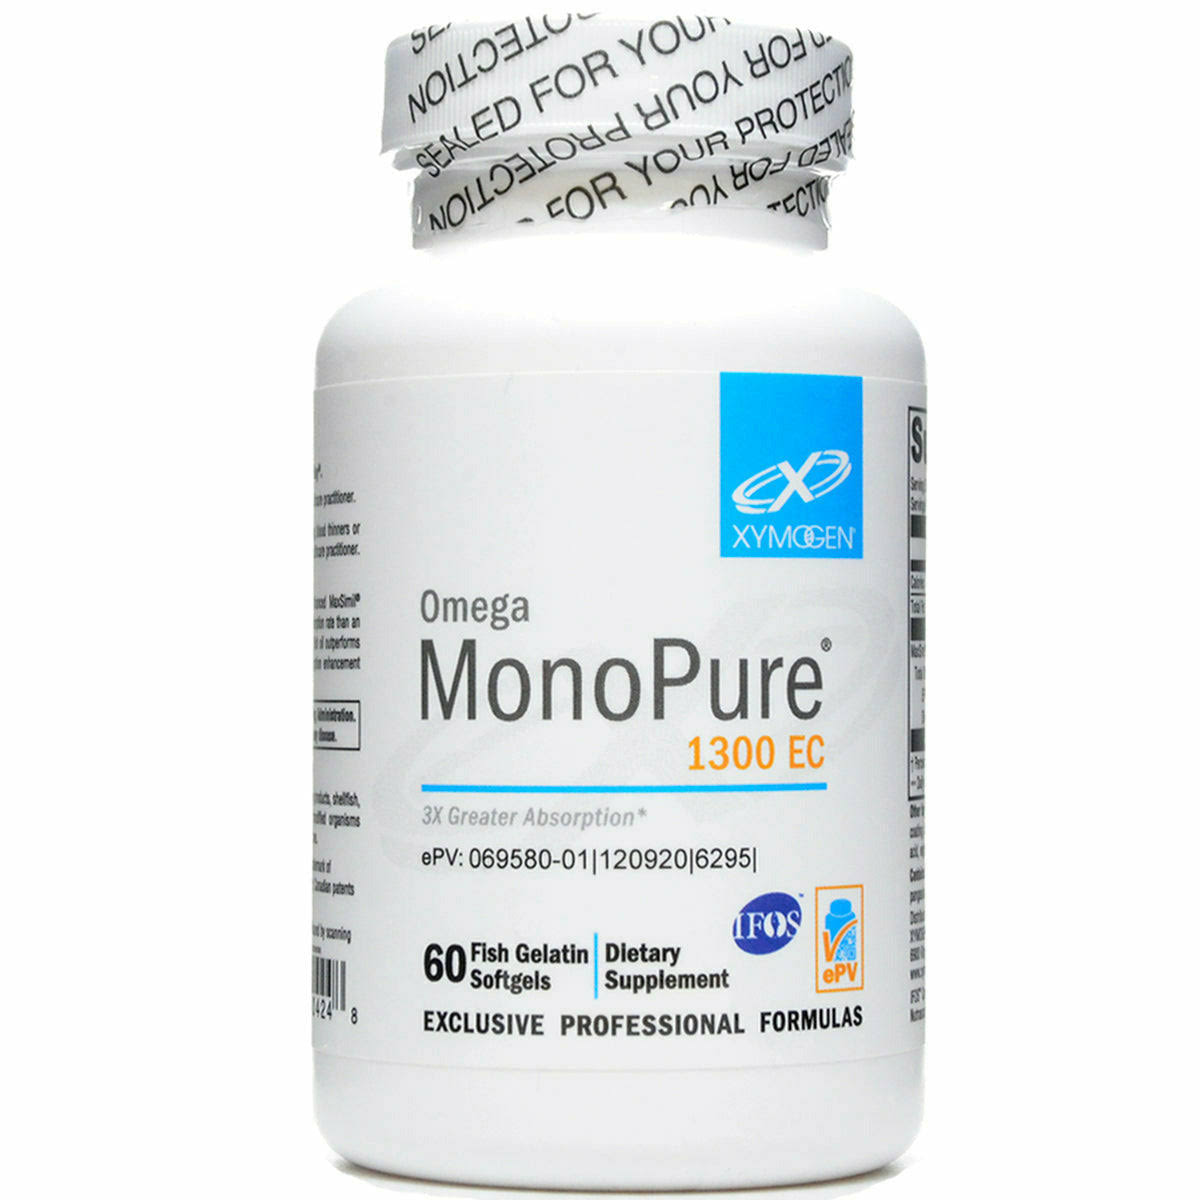 Xymogen Omega MonoPure 1300 EC - 1,300 mg - 60 Softgels